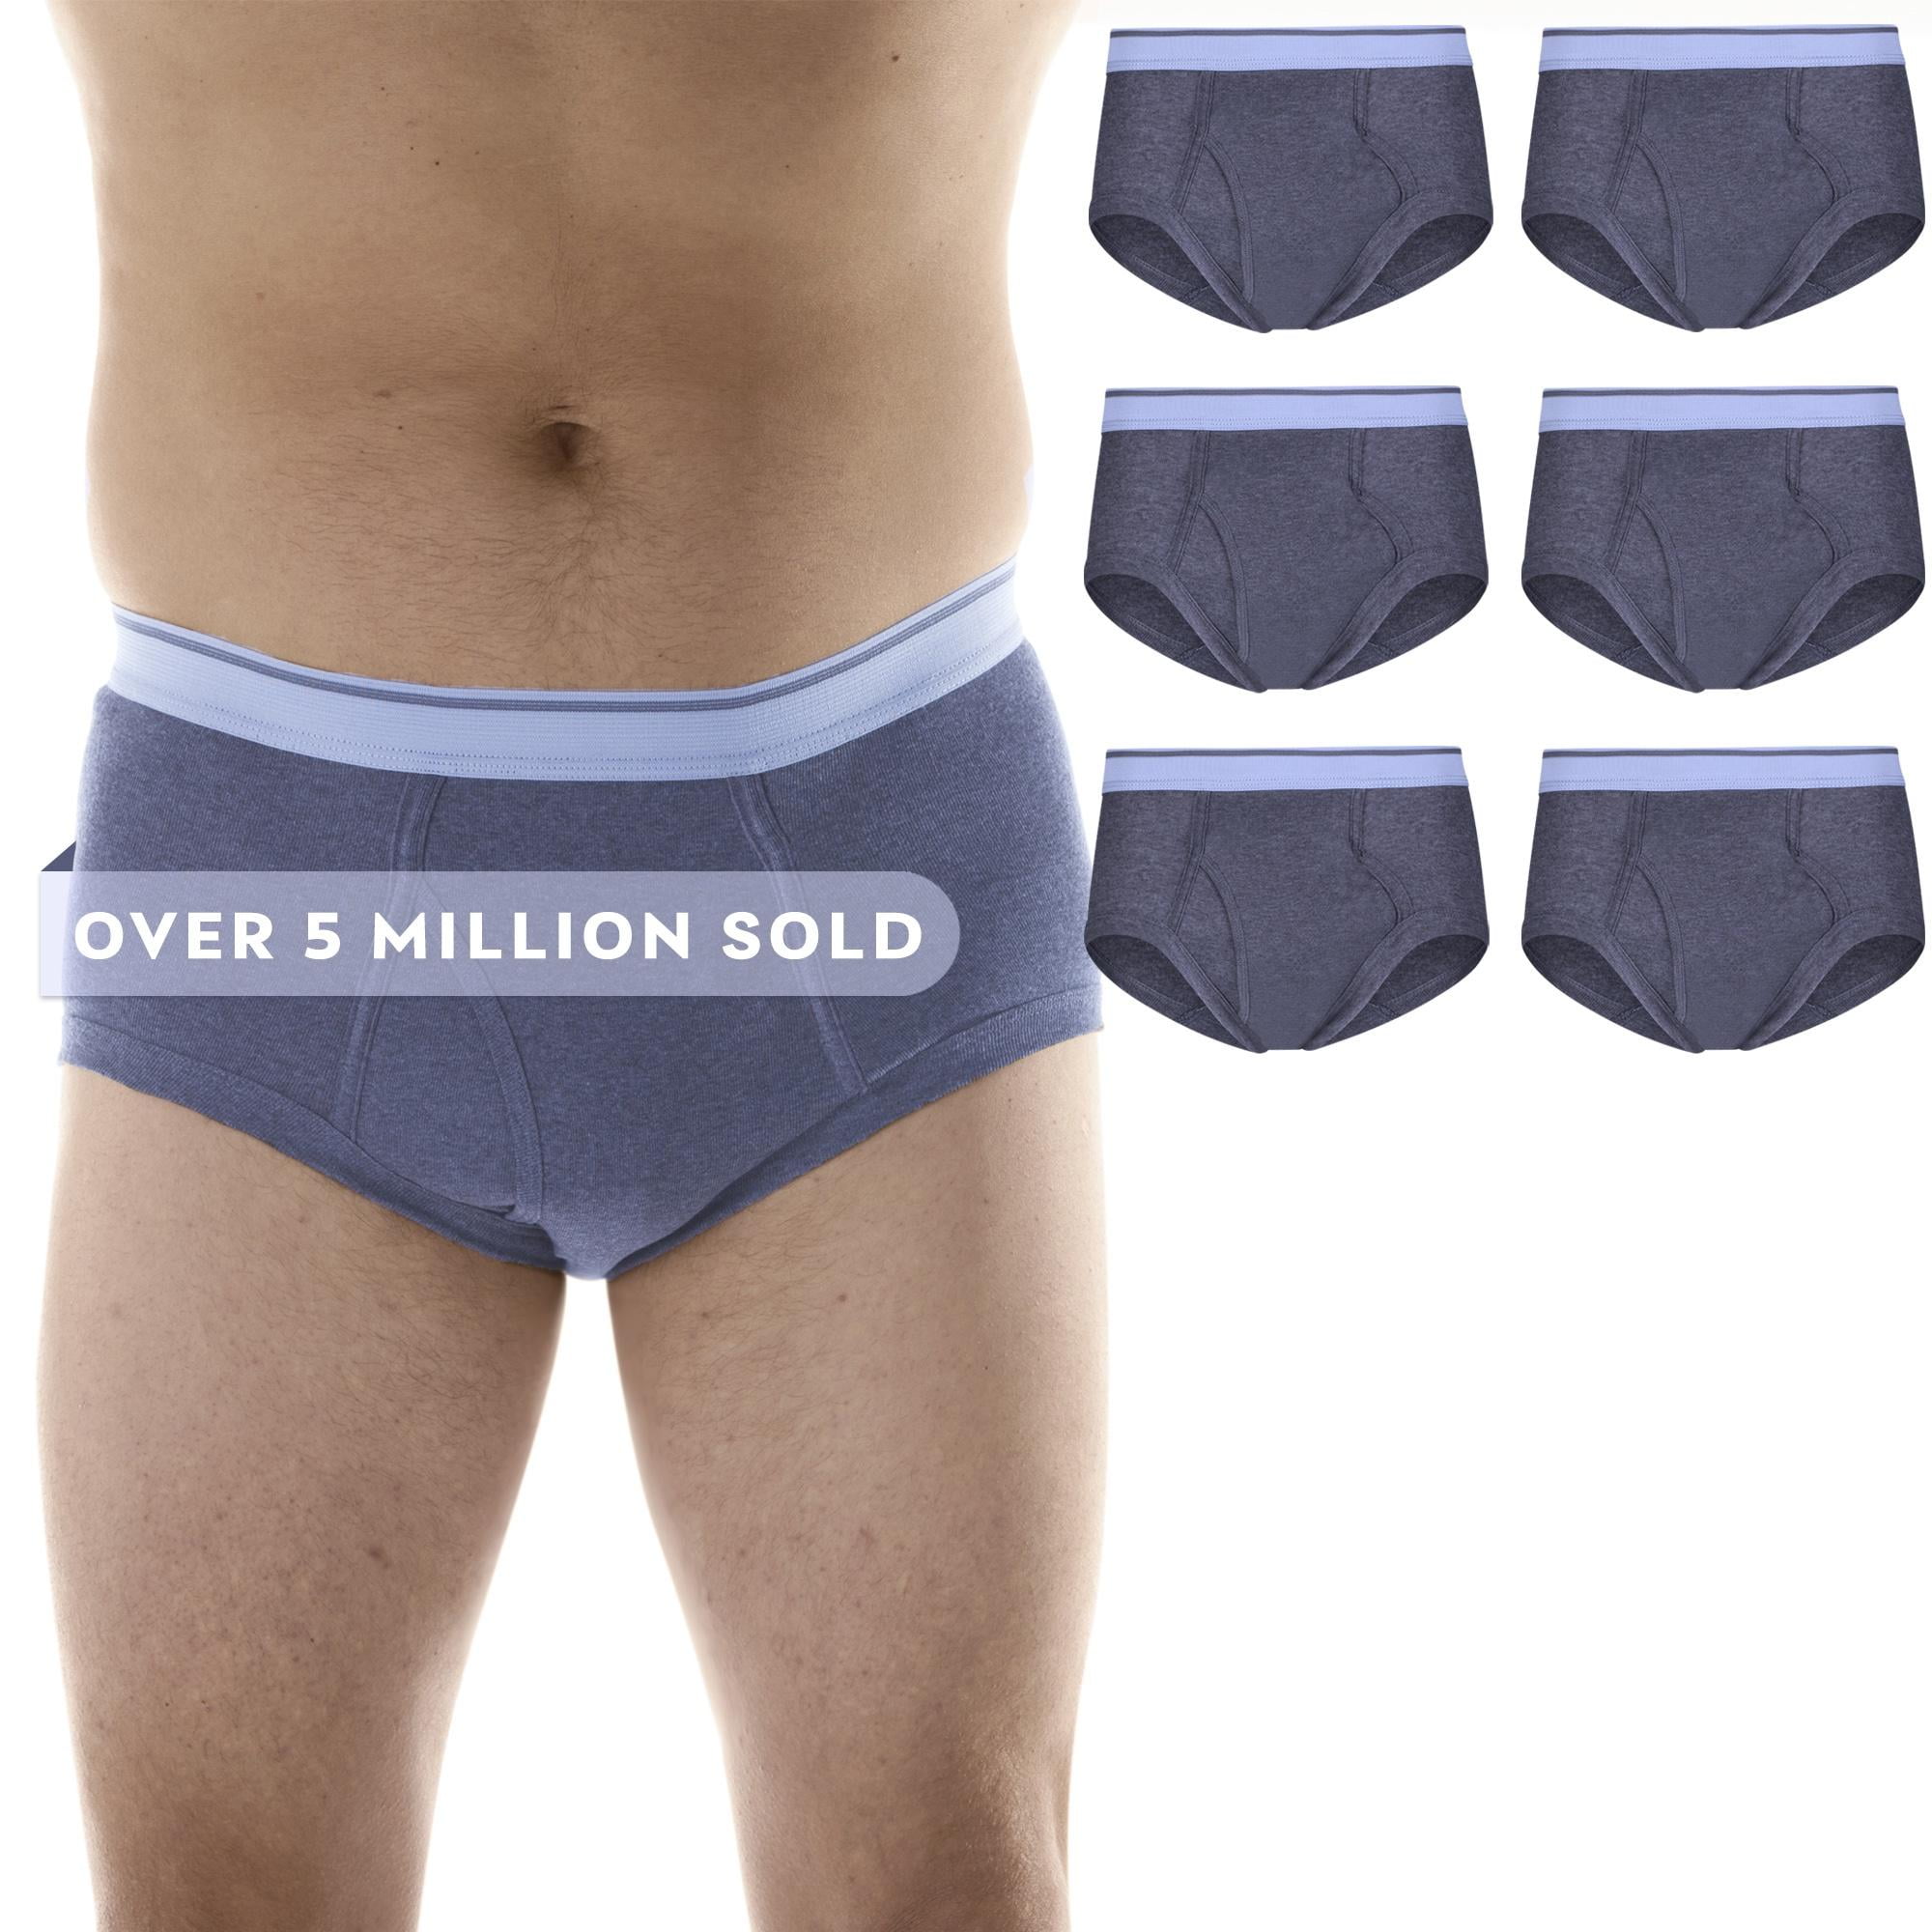  BATTEWA Washable Incontinence Underwear for Men